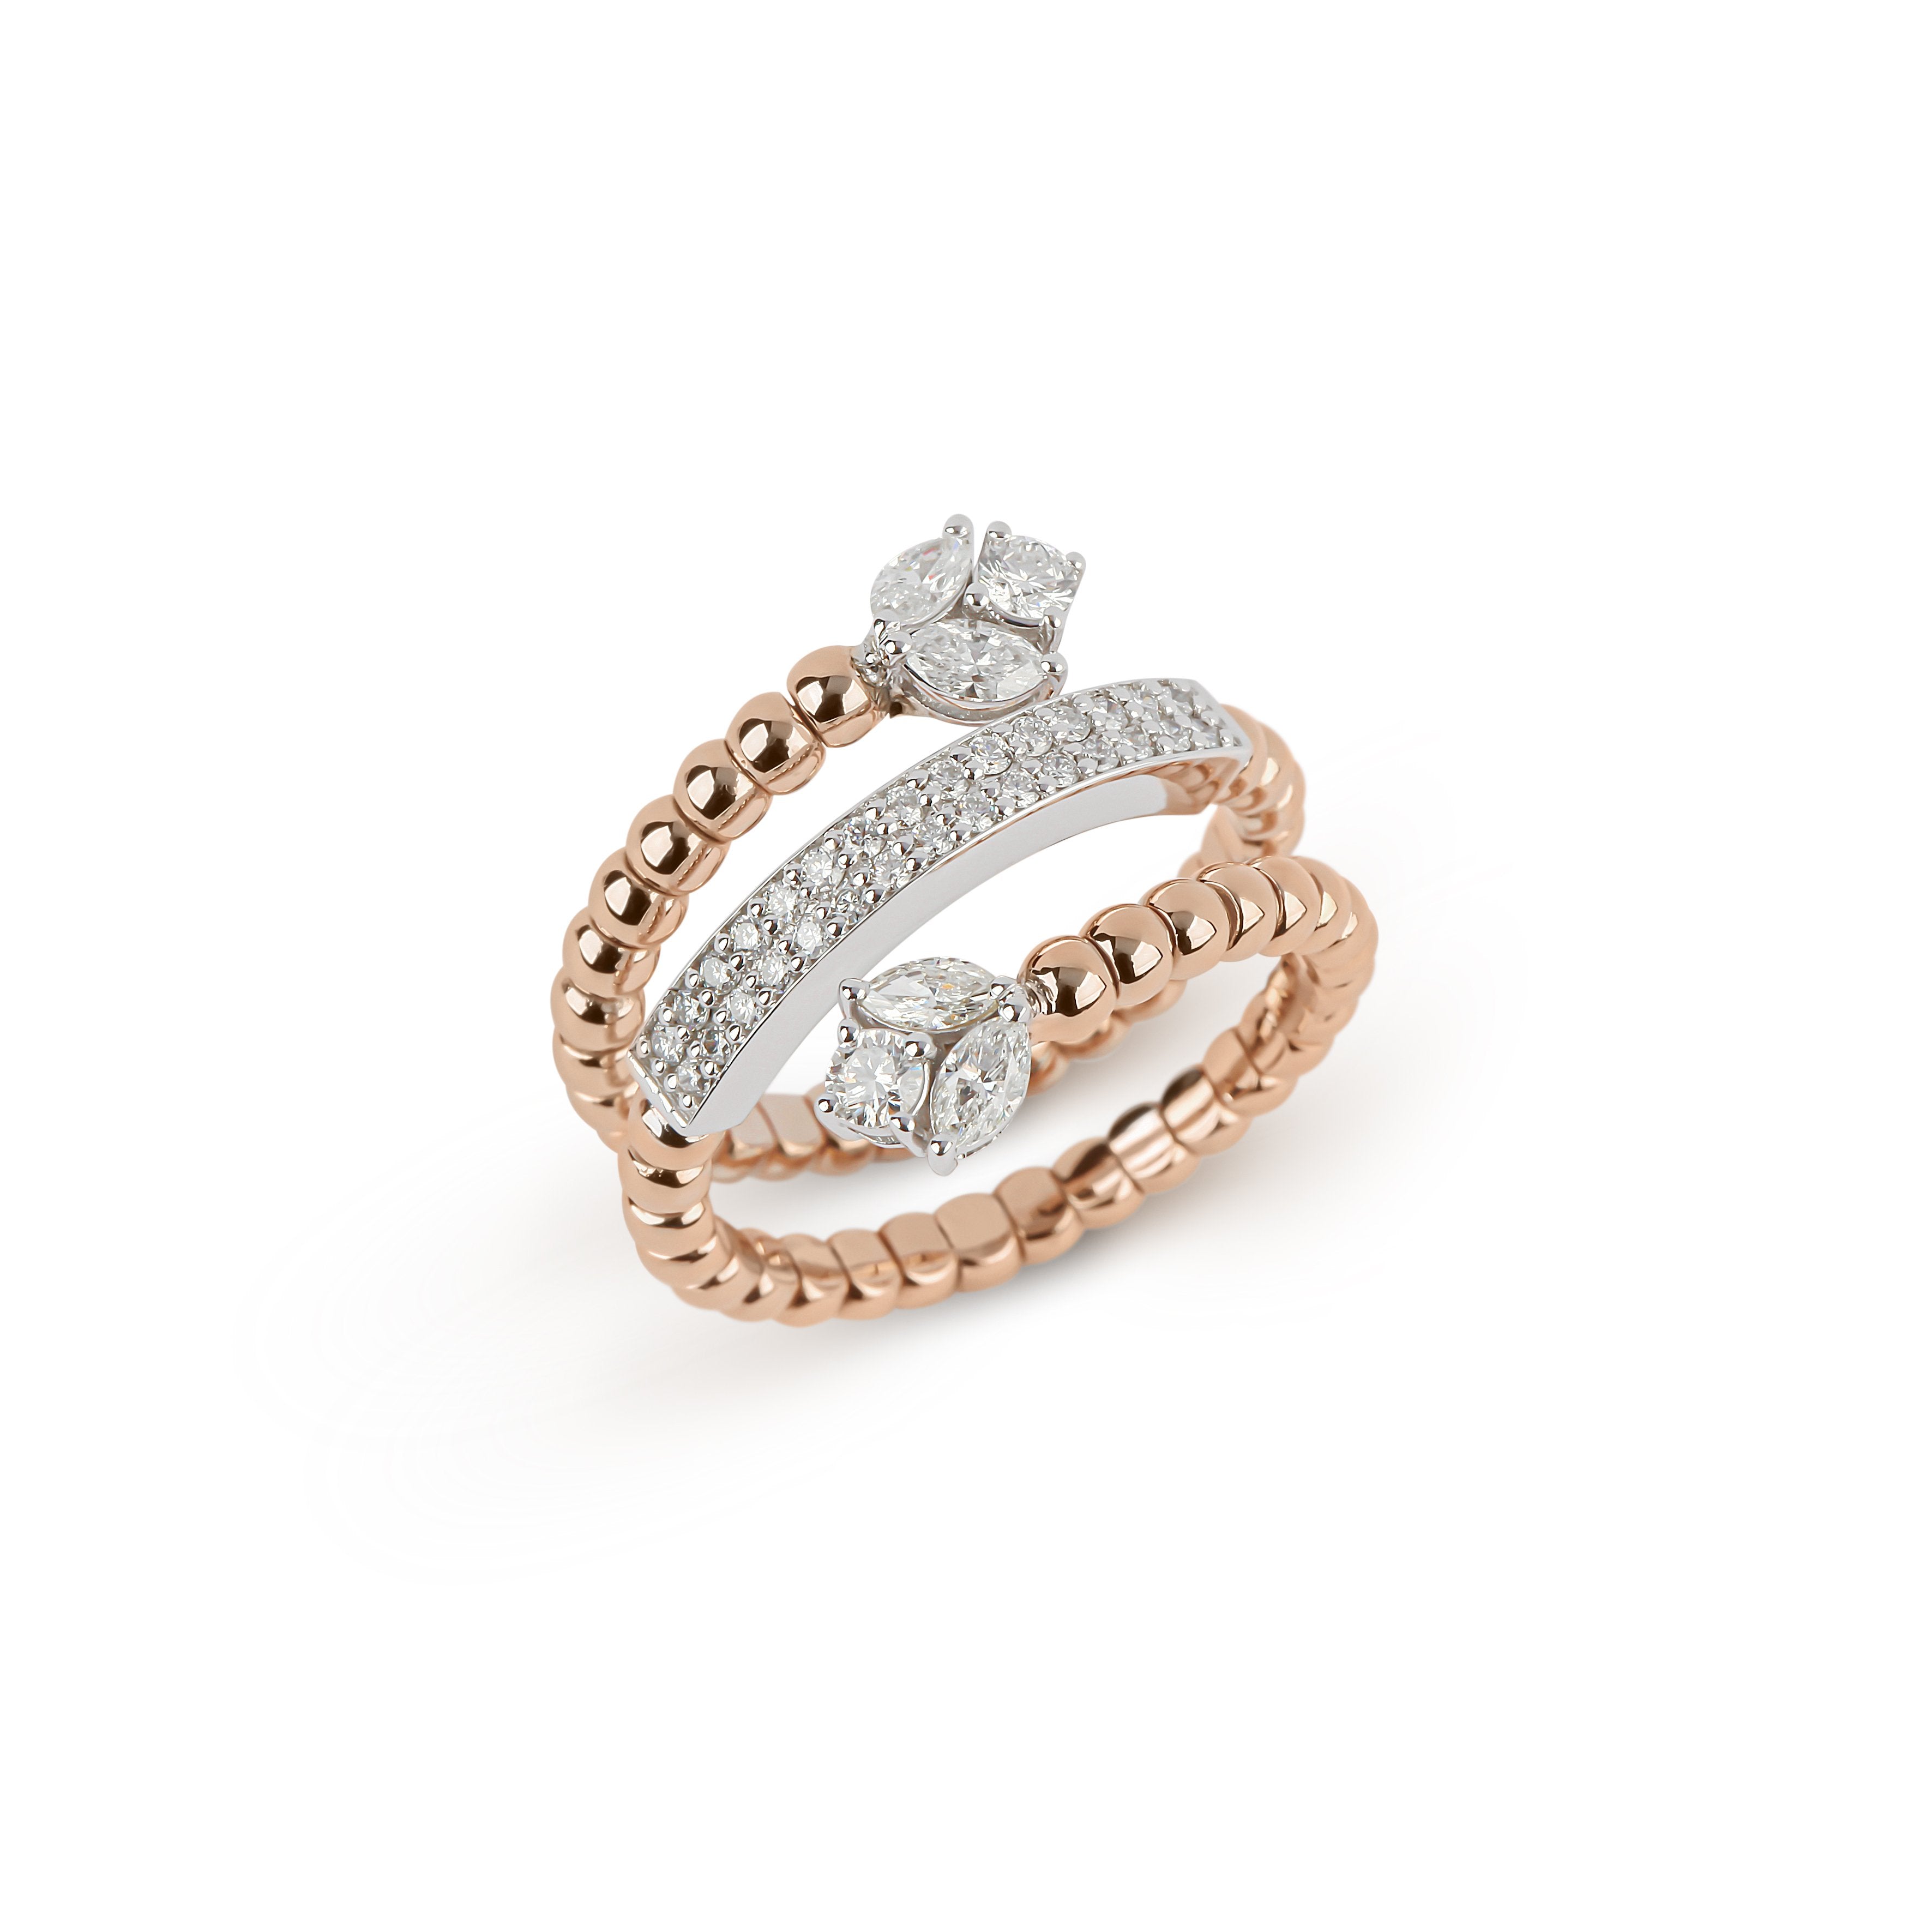 1.75 Carat Diamond Ring on Hand | Happy Jewelers – Happy Jewelers